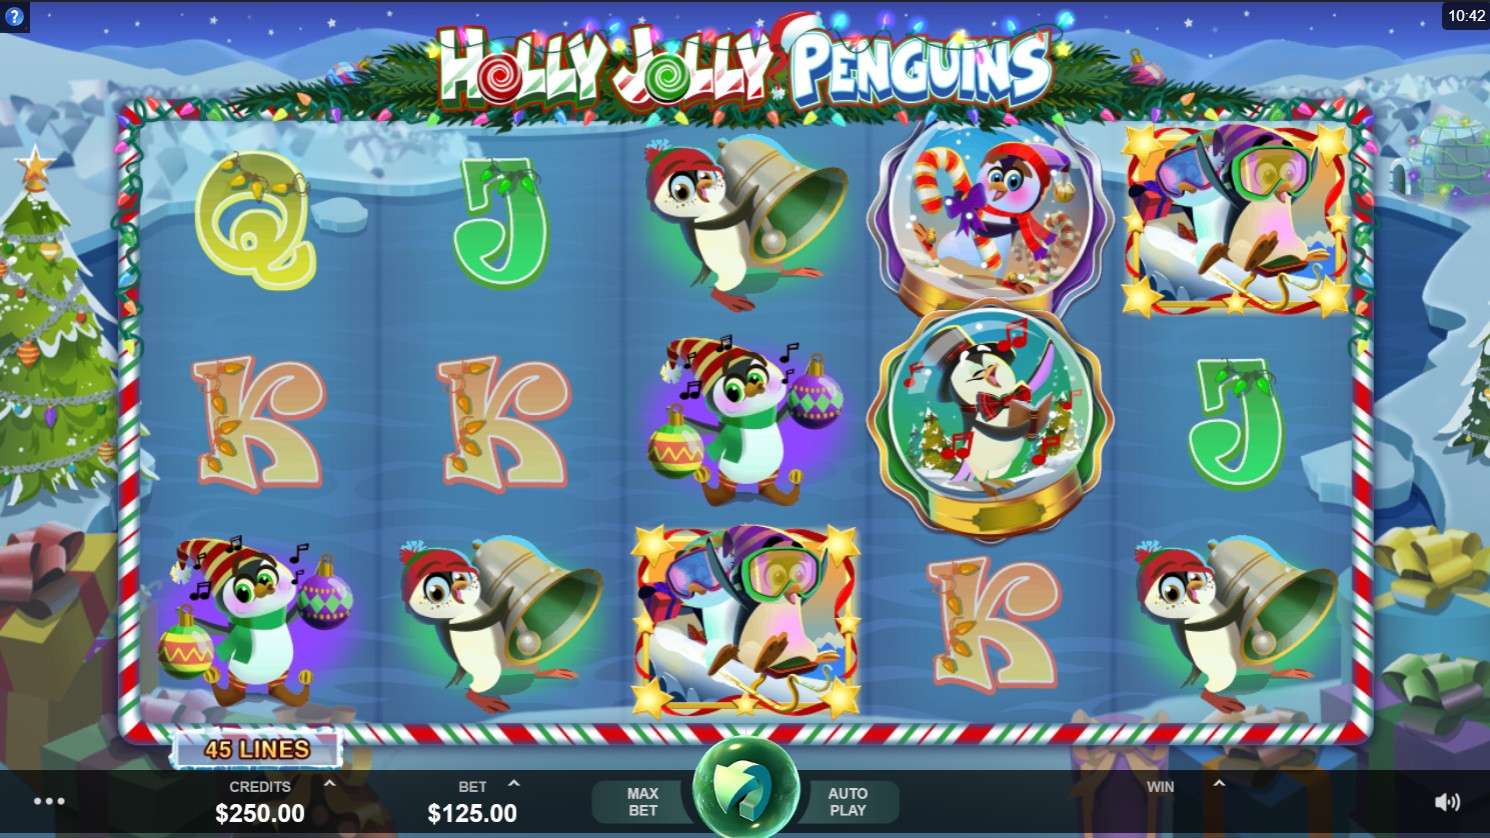 Holly Jolly Penguins (Holly Jolly Penguins) from category Slots